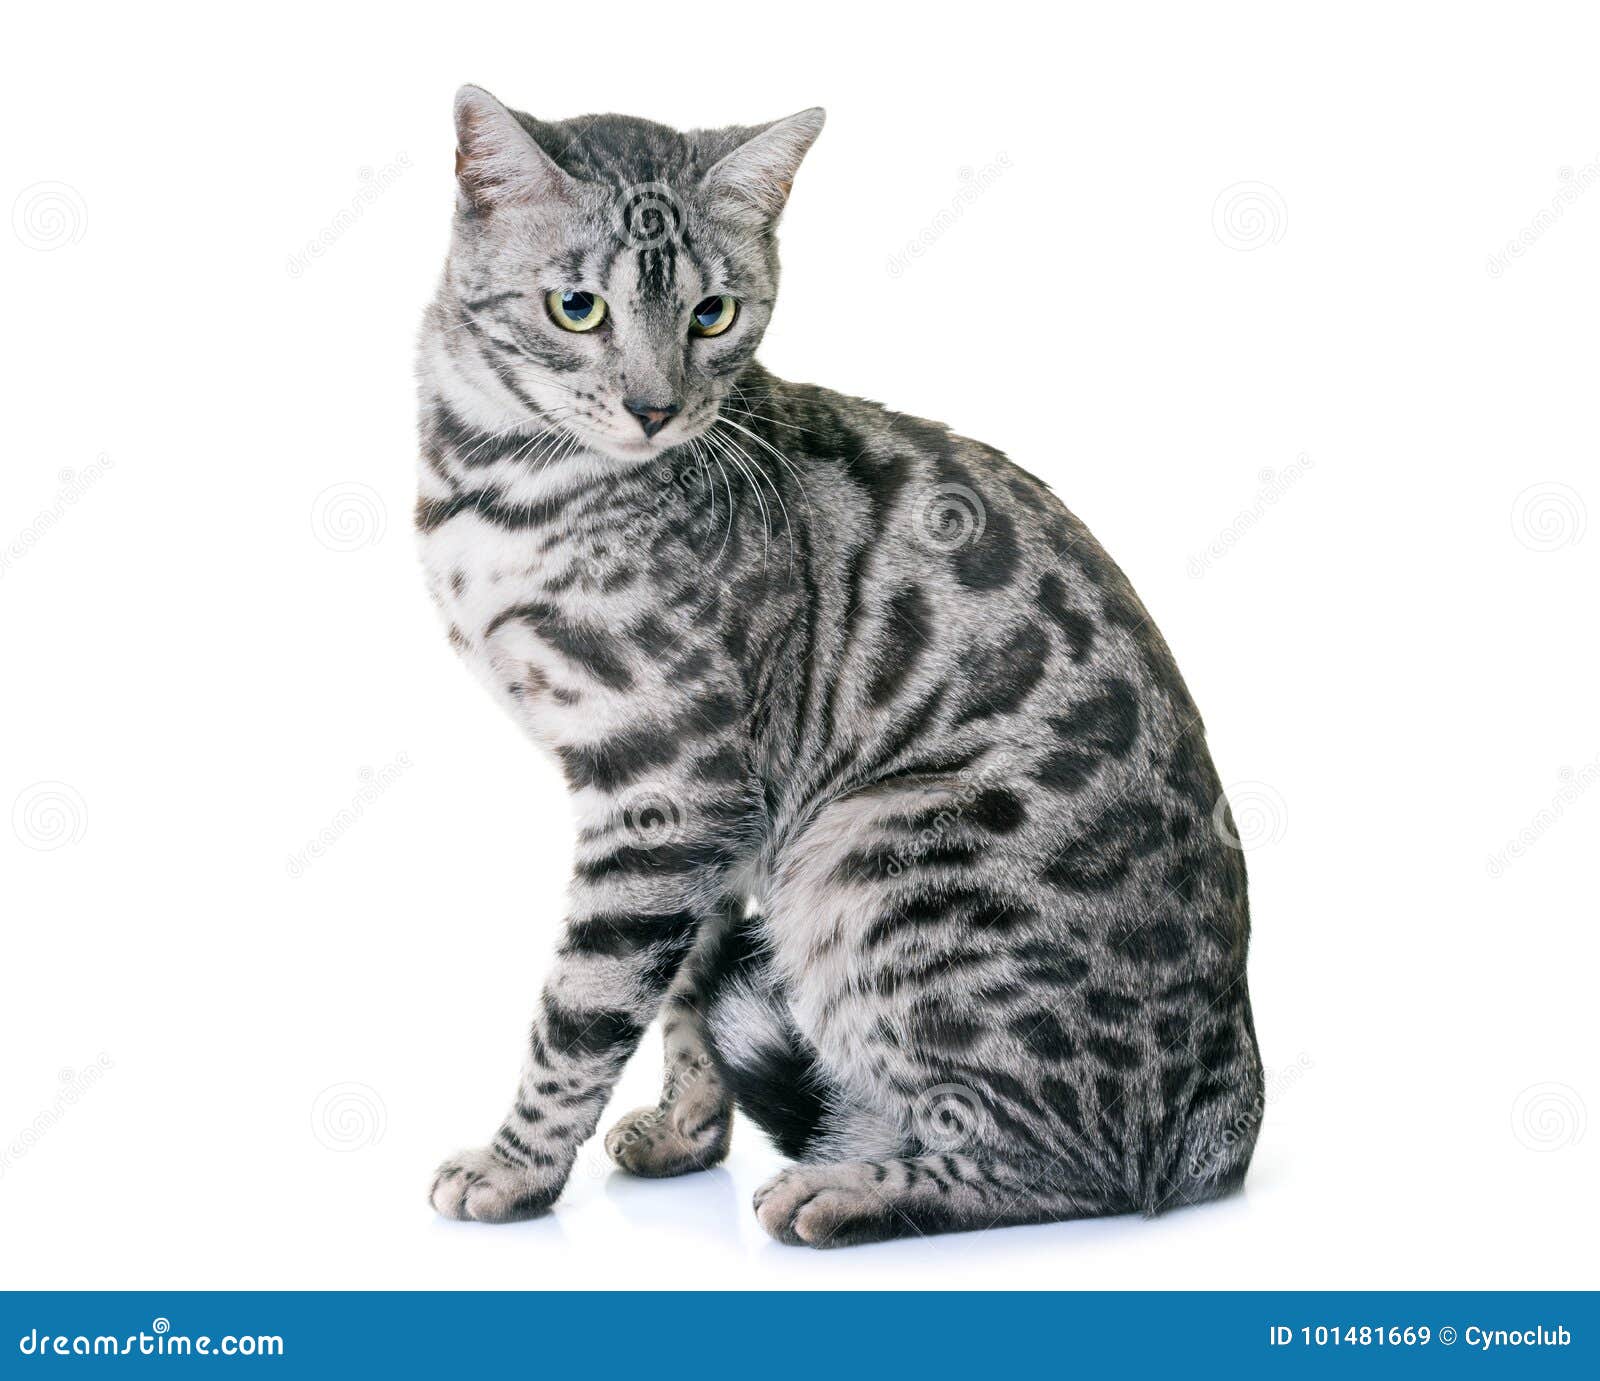 Bengal cat in studio stock image. Image of purebred - 101481669